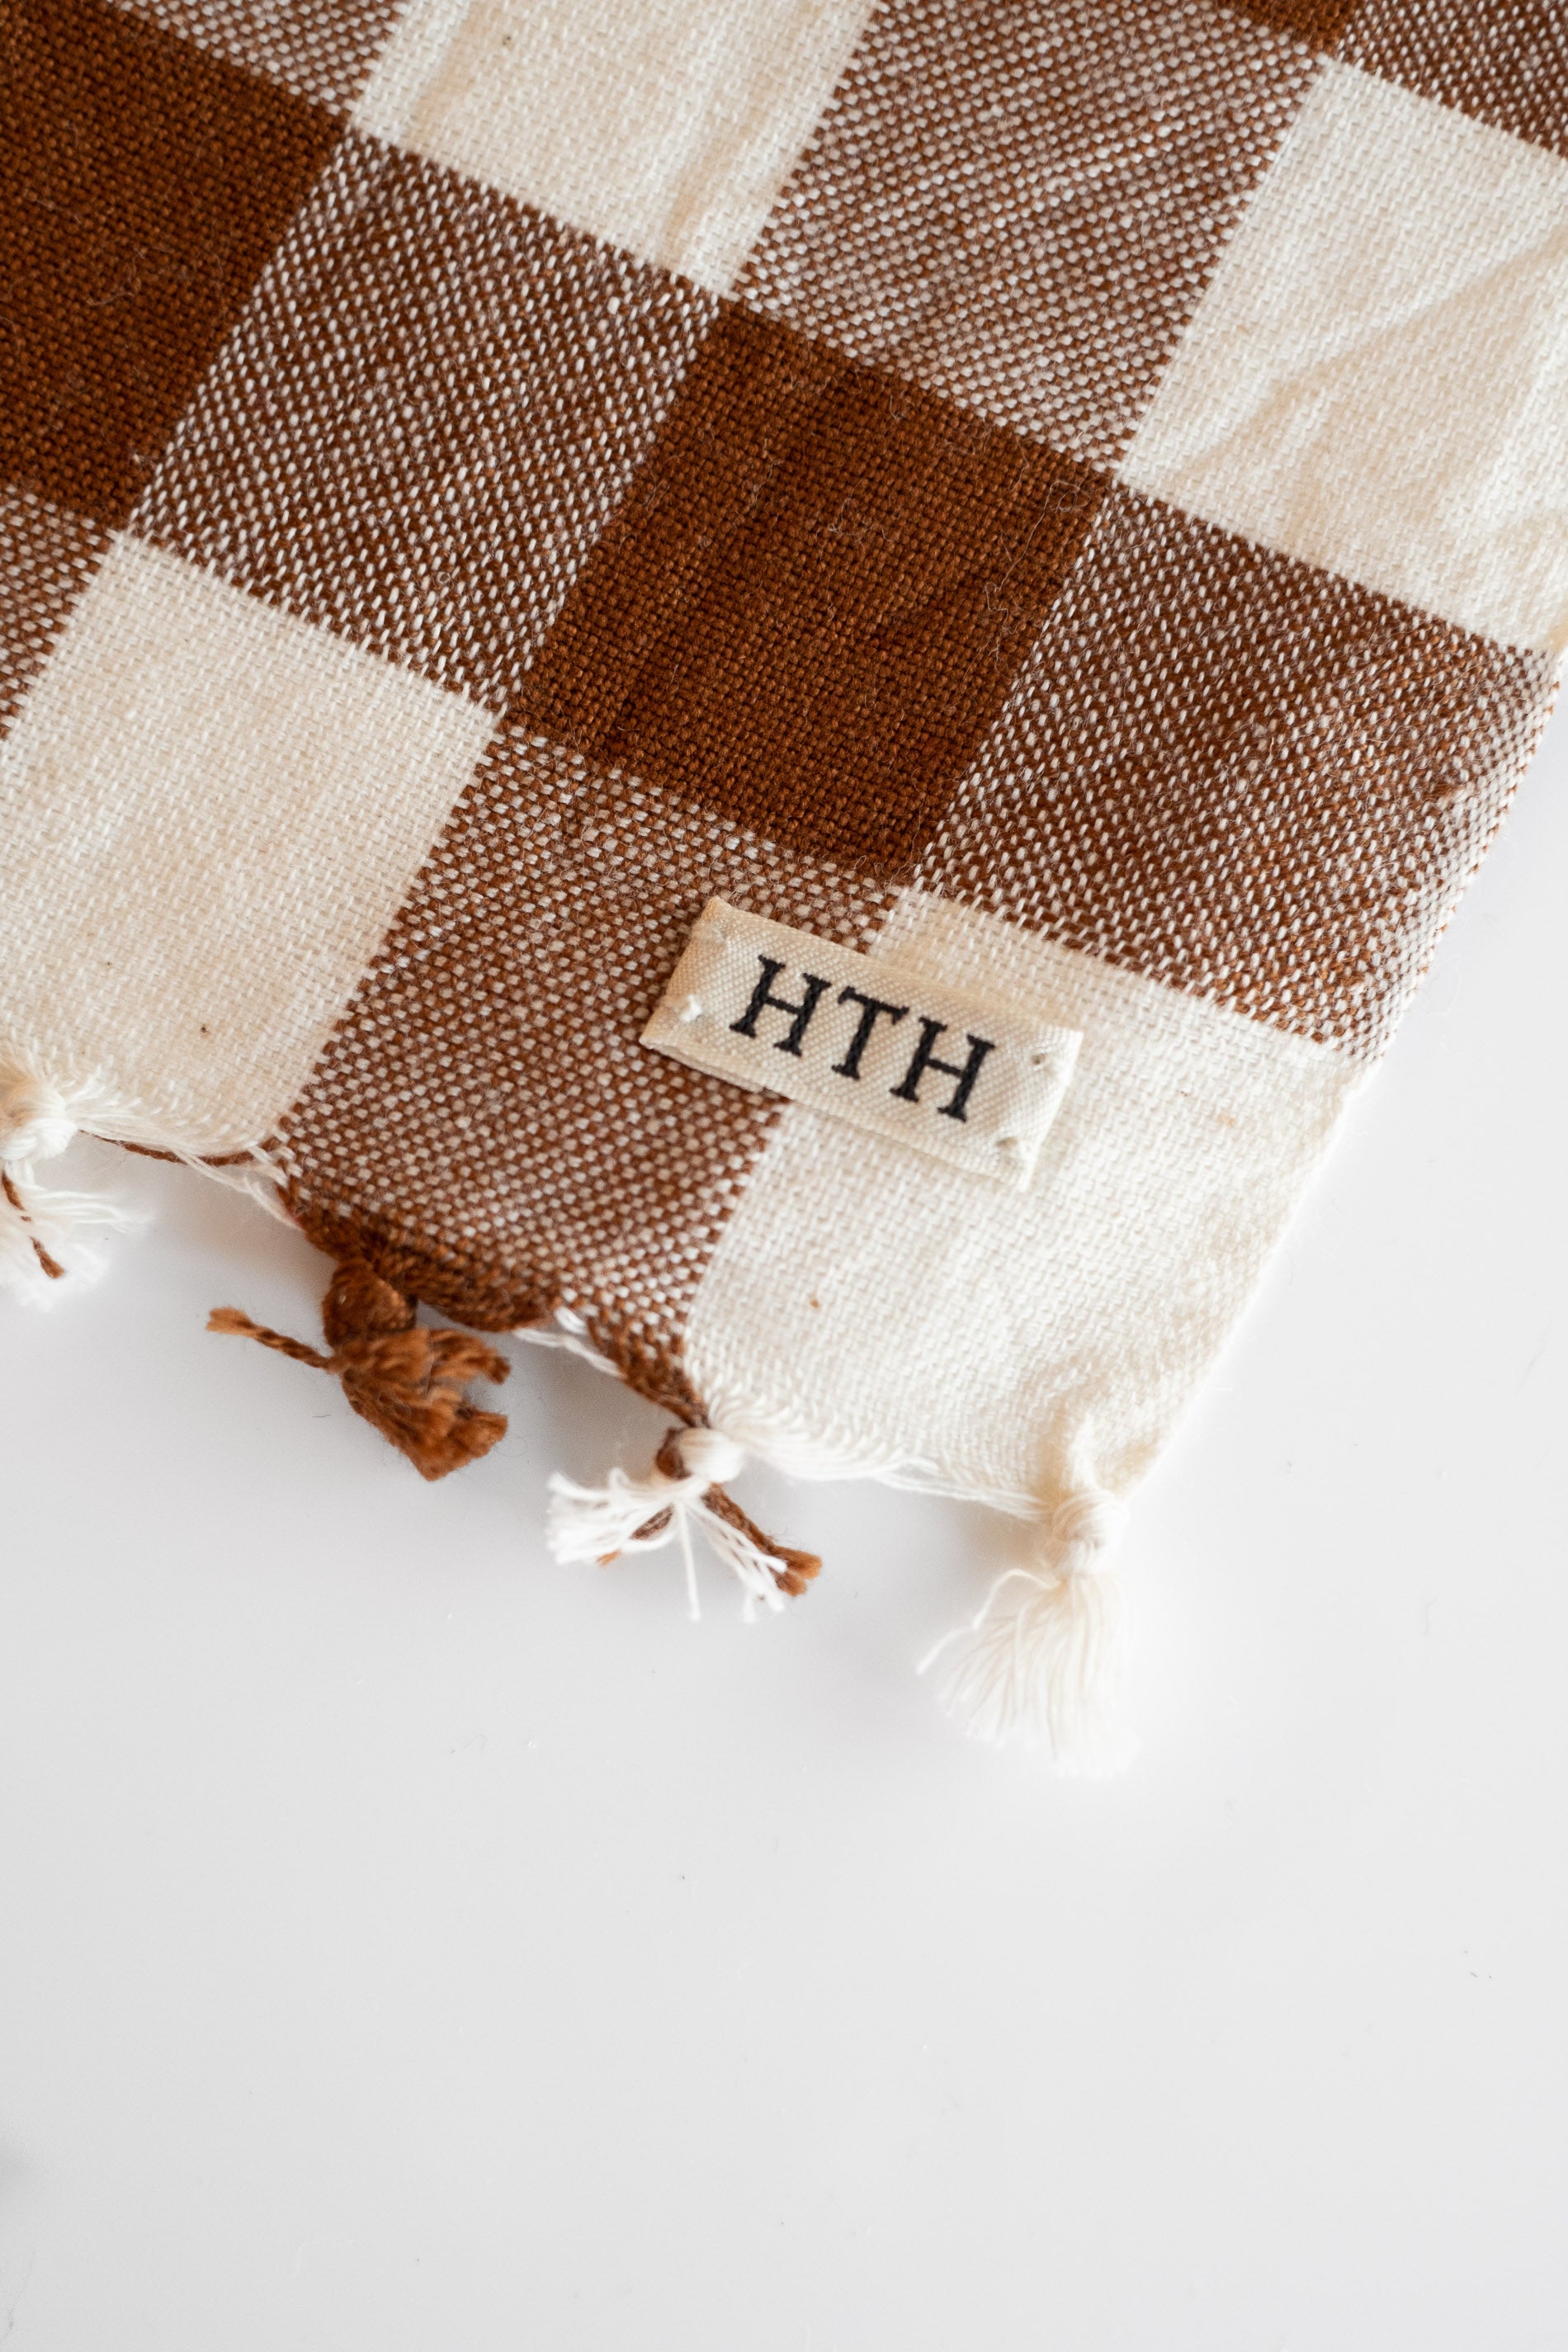 HARBOR PLAID - Hunter Tea Towel - Heather Taylor Home